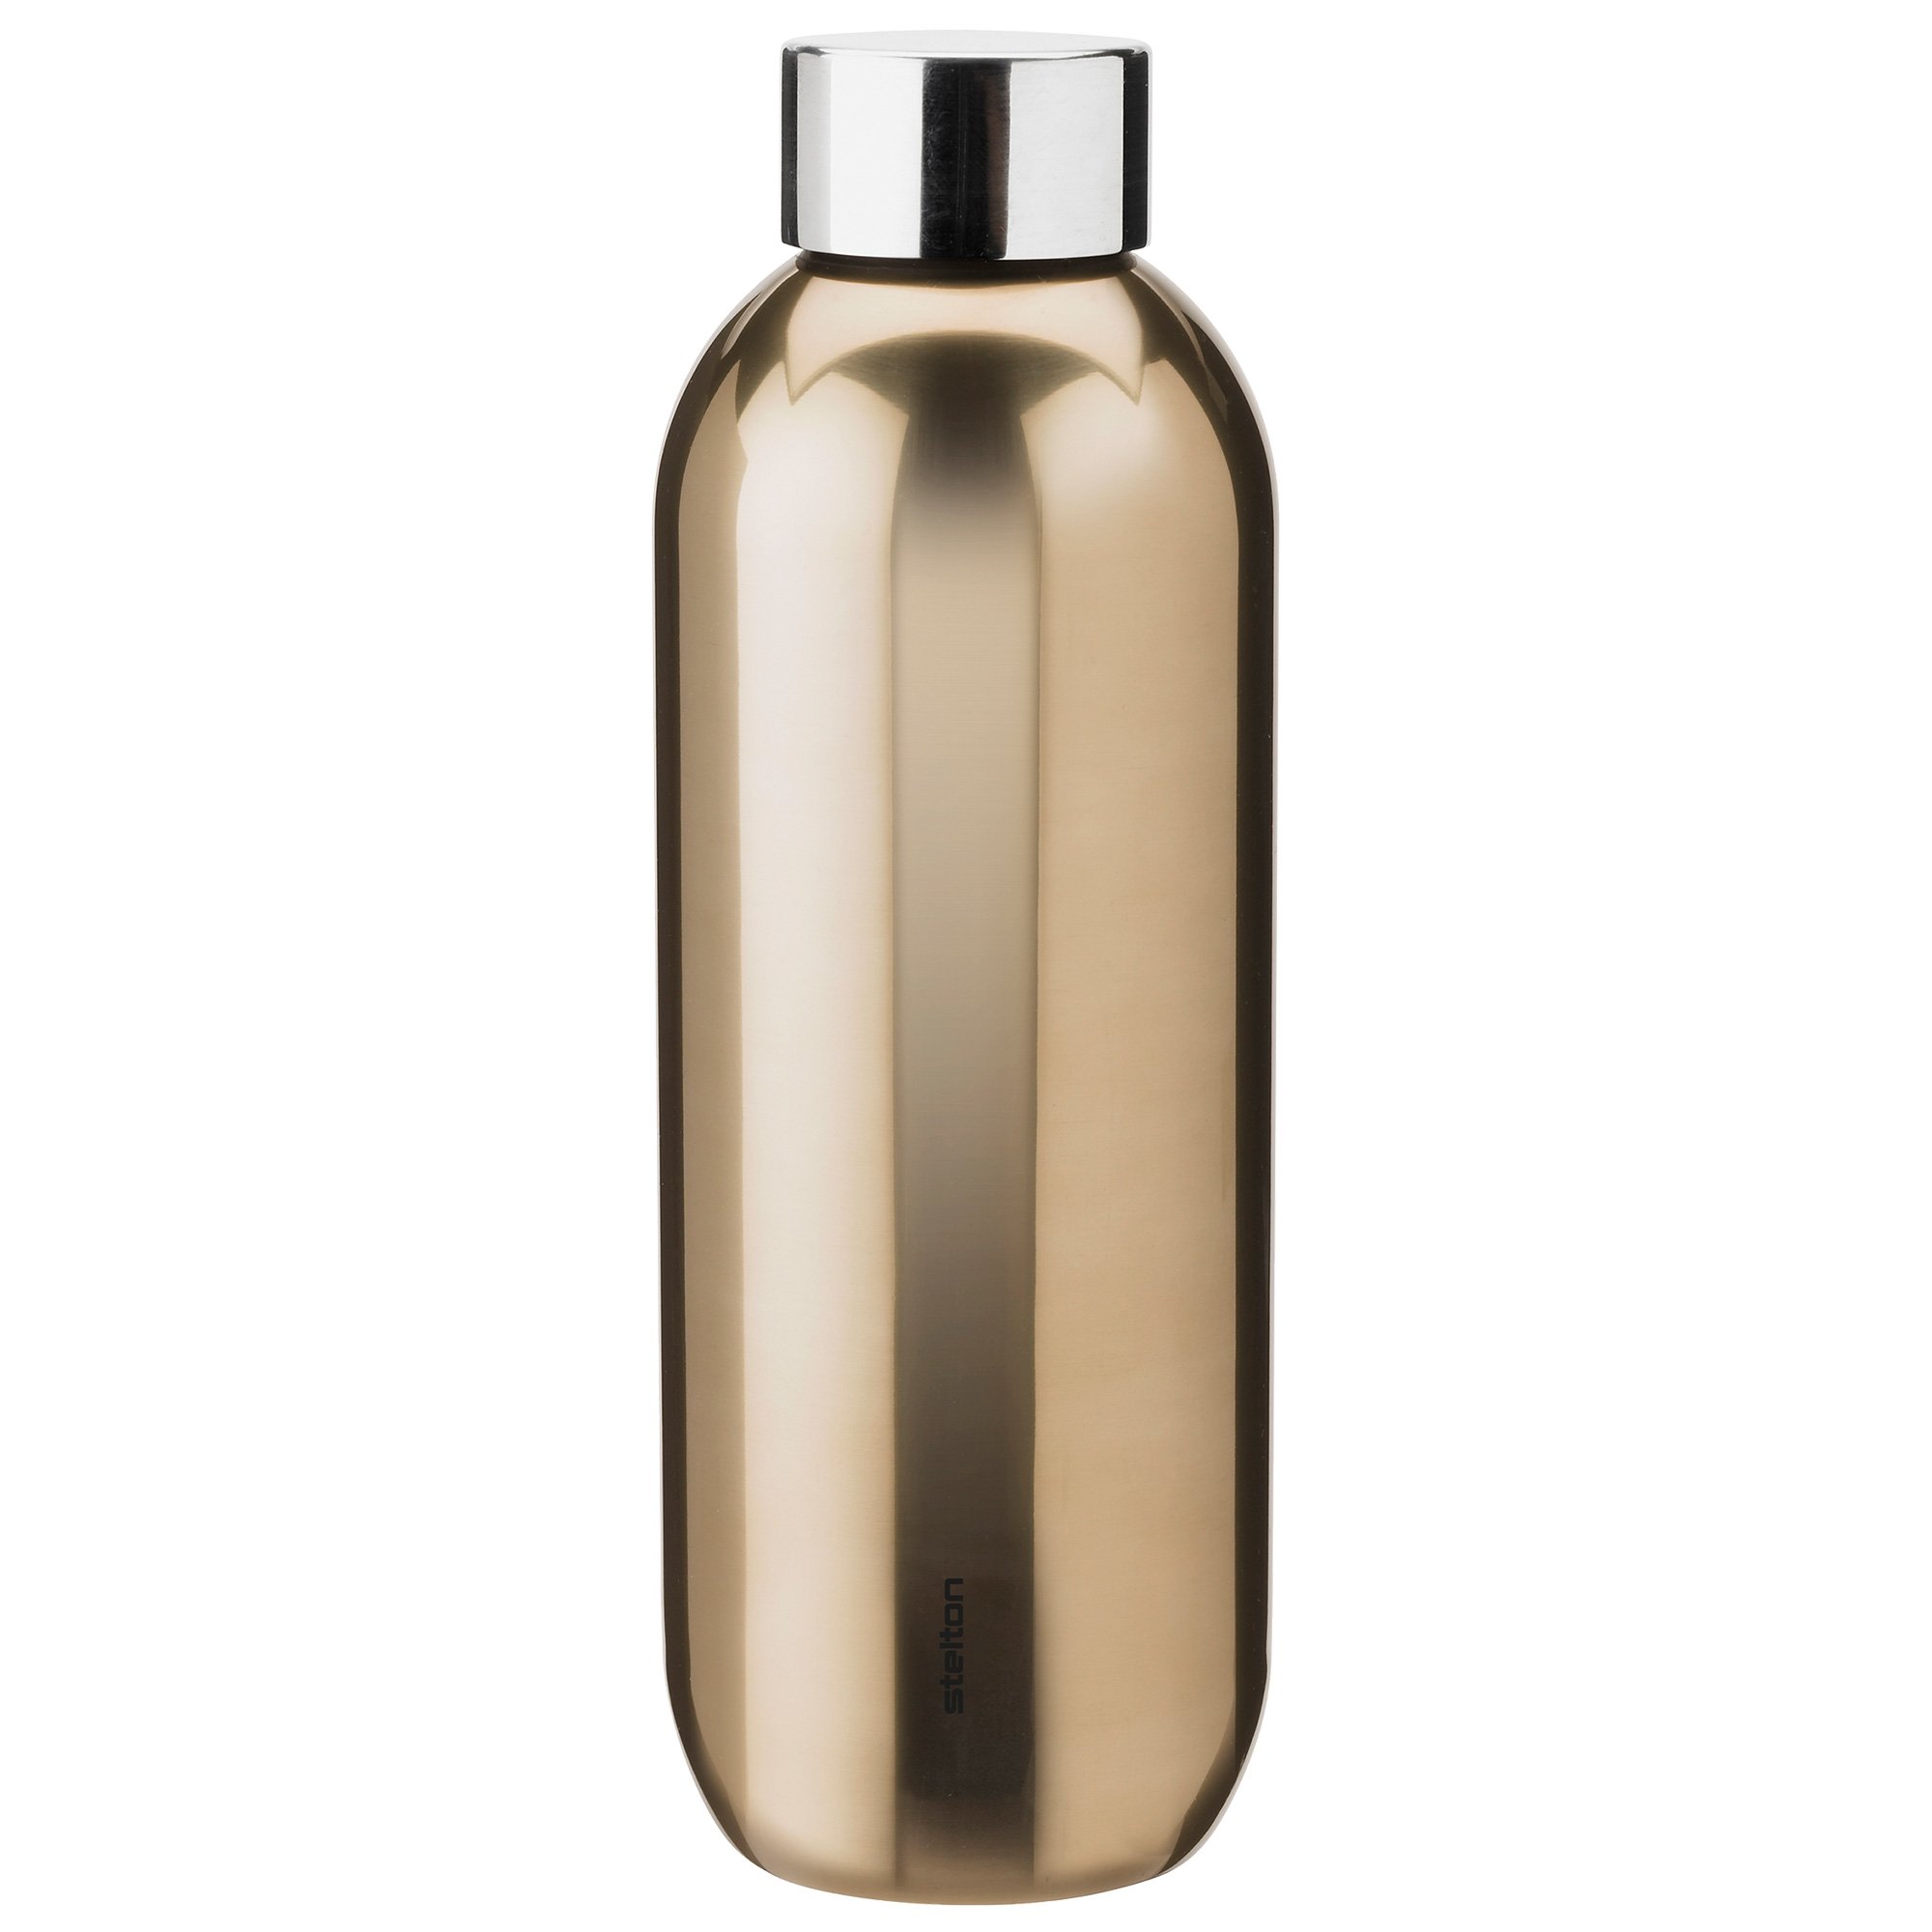 Stelton Keep Cool termosflaske 0.6 liter dark gold